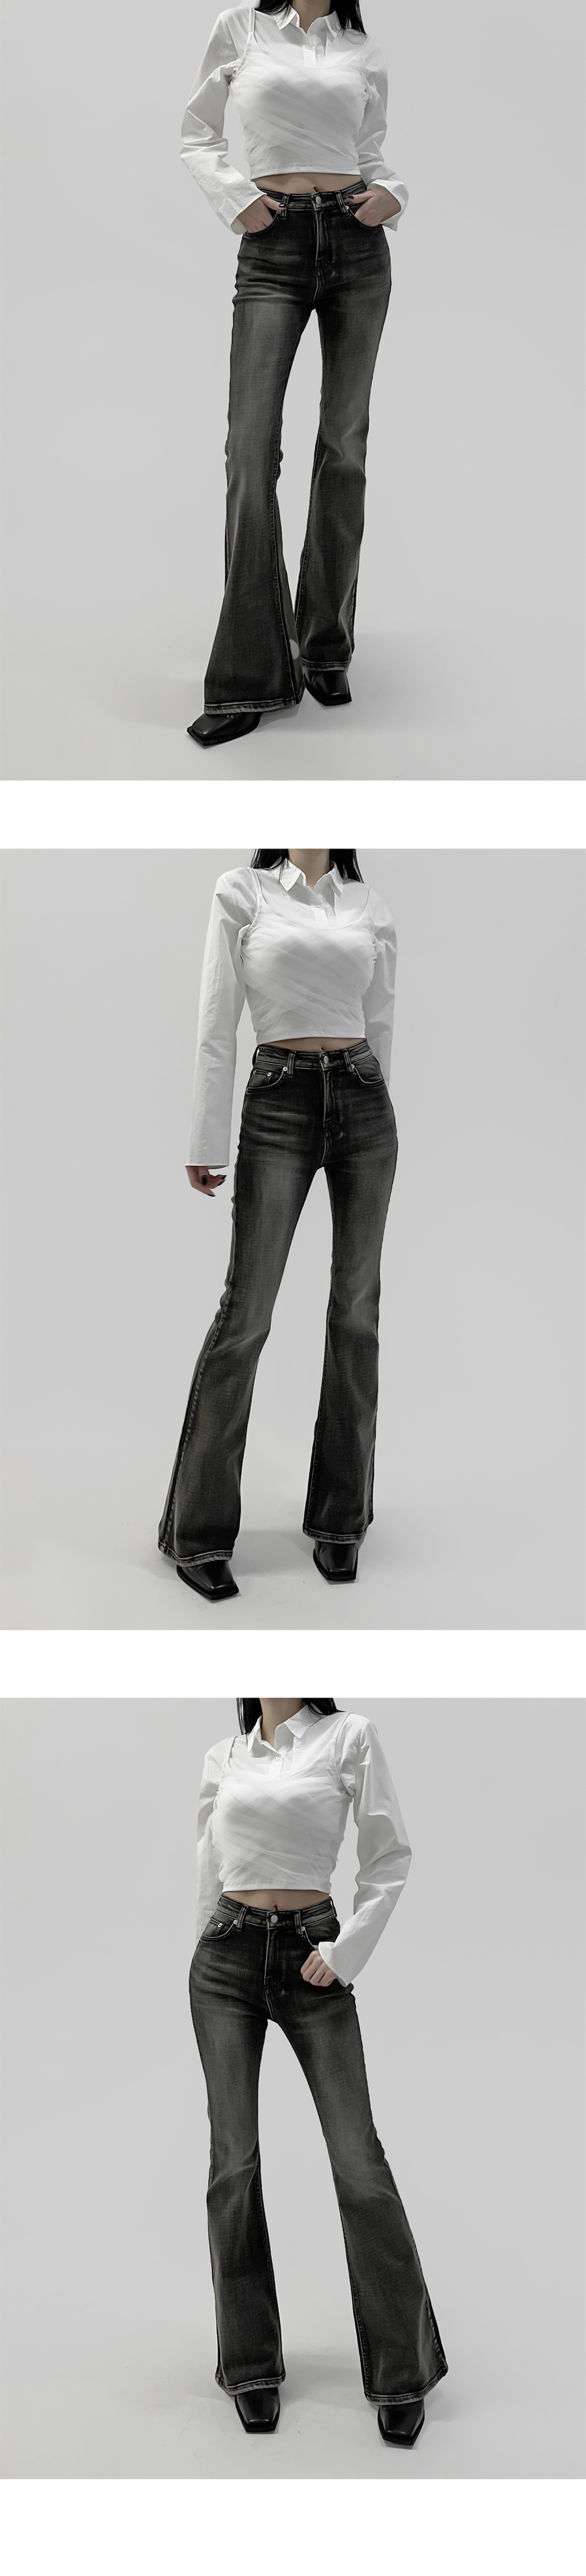 suspenders skirt/pants model image-S1L3